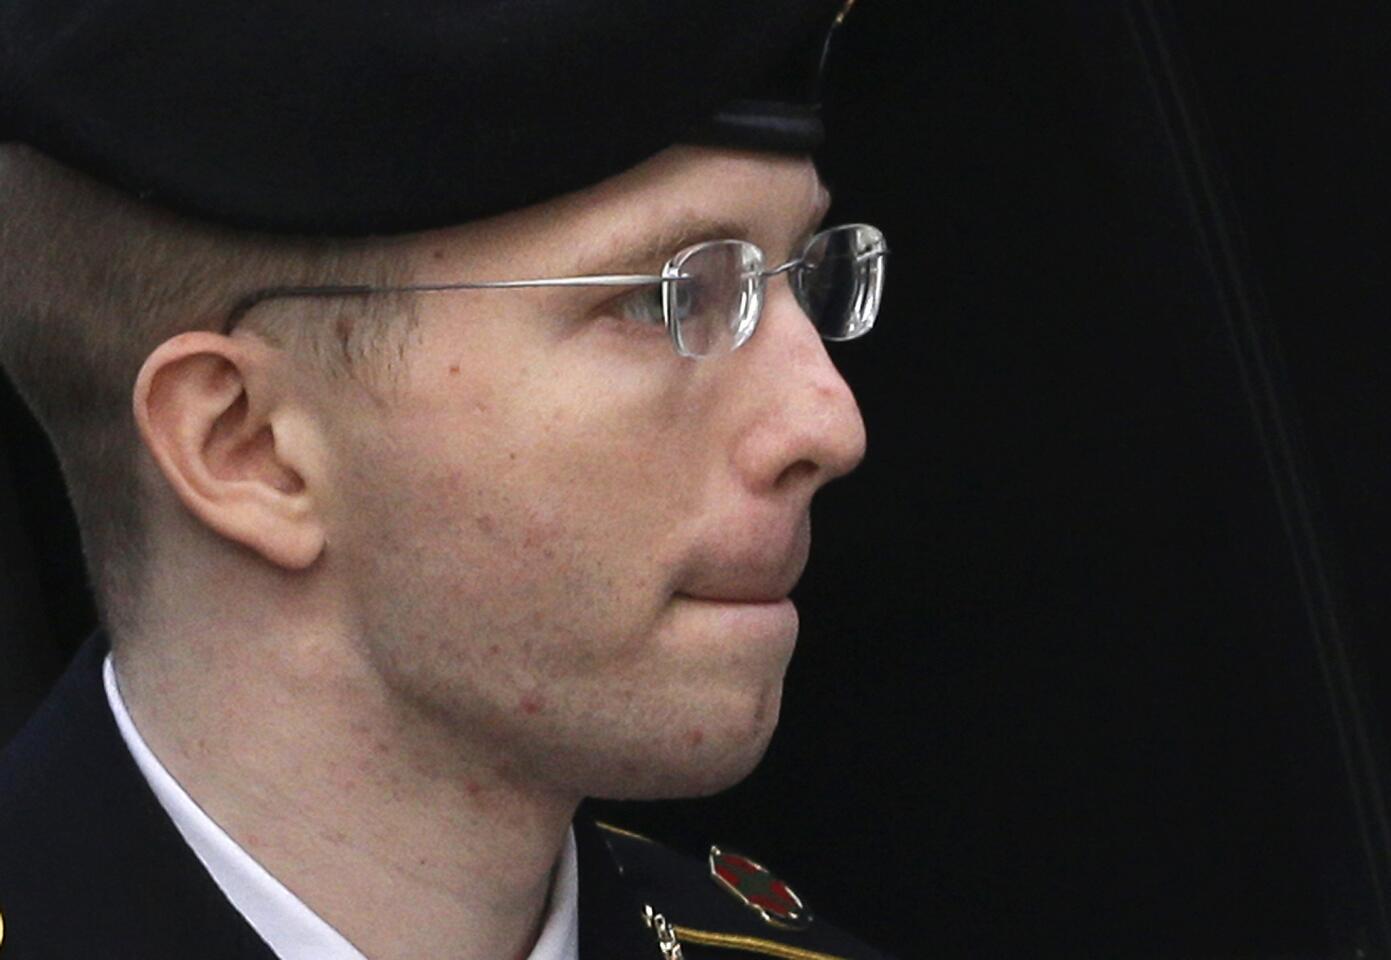 Manning before sentencing